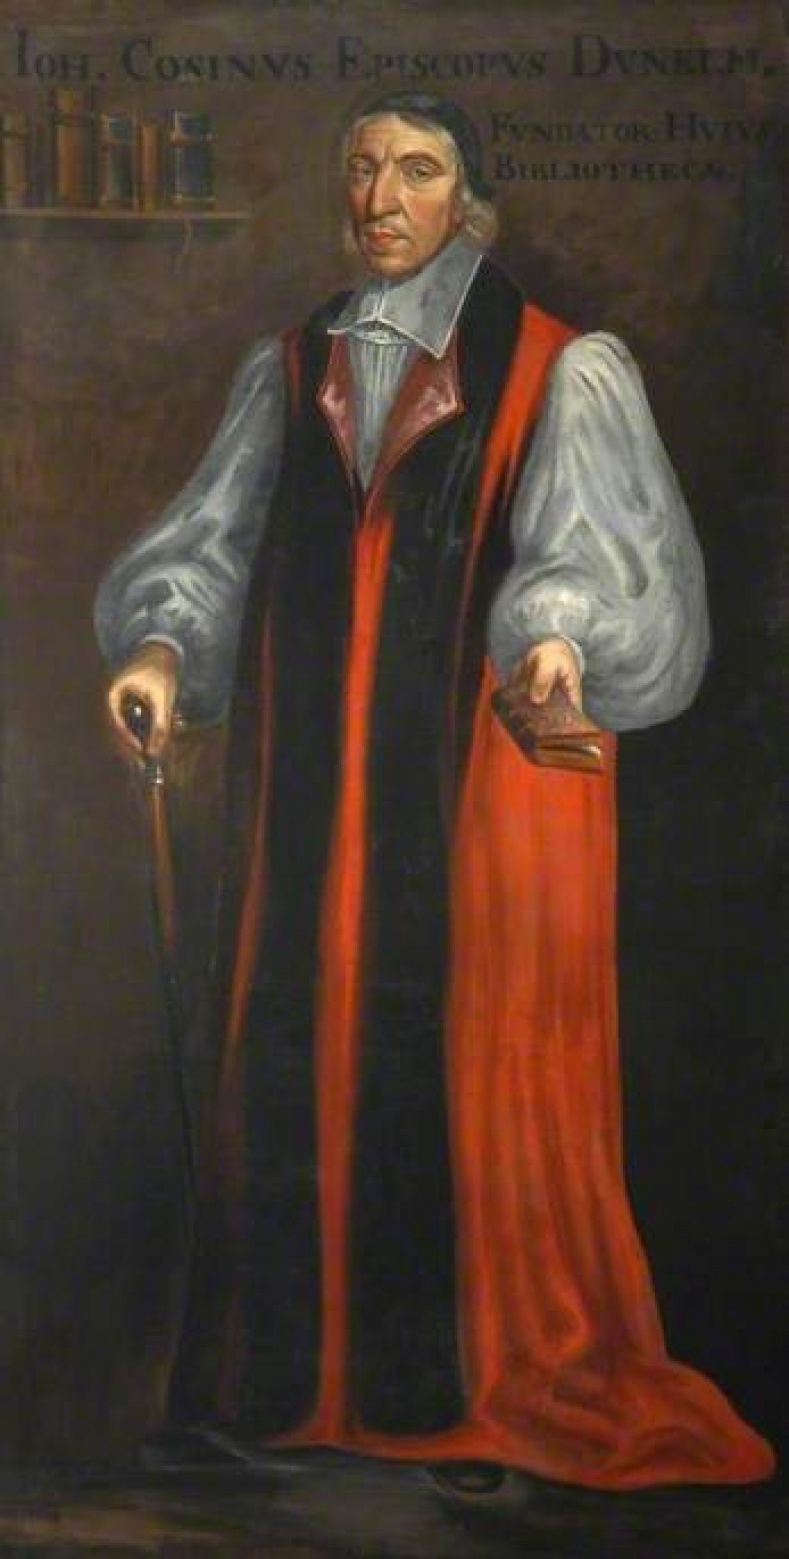 John Cosin (1594–1672), Bishop of Durham,